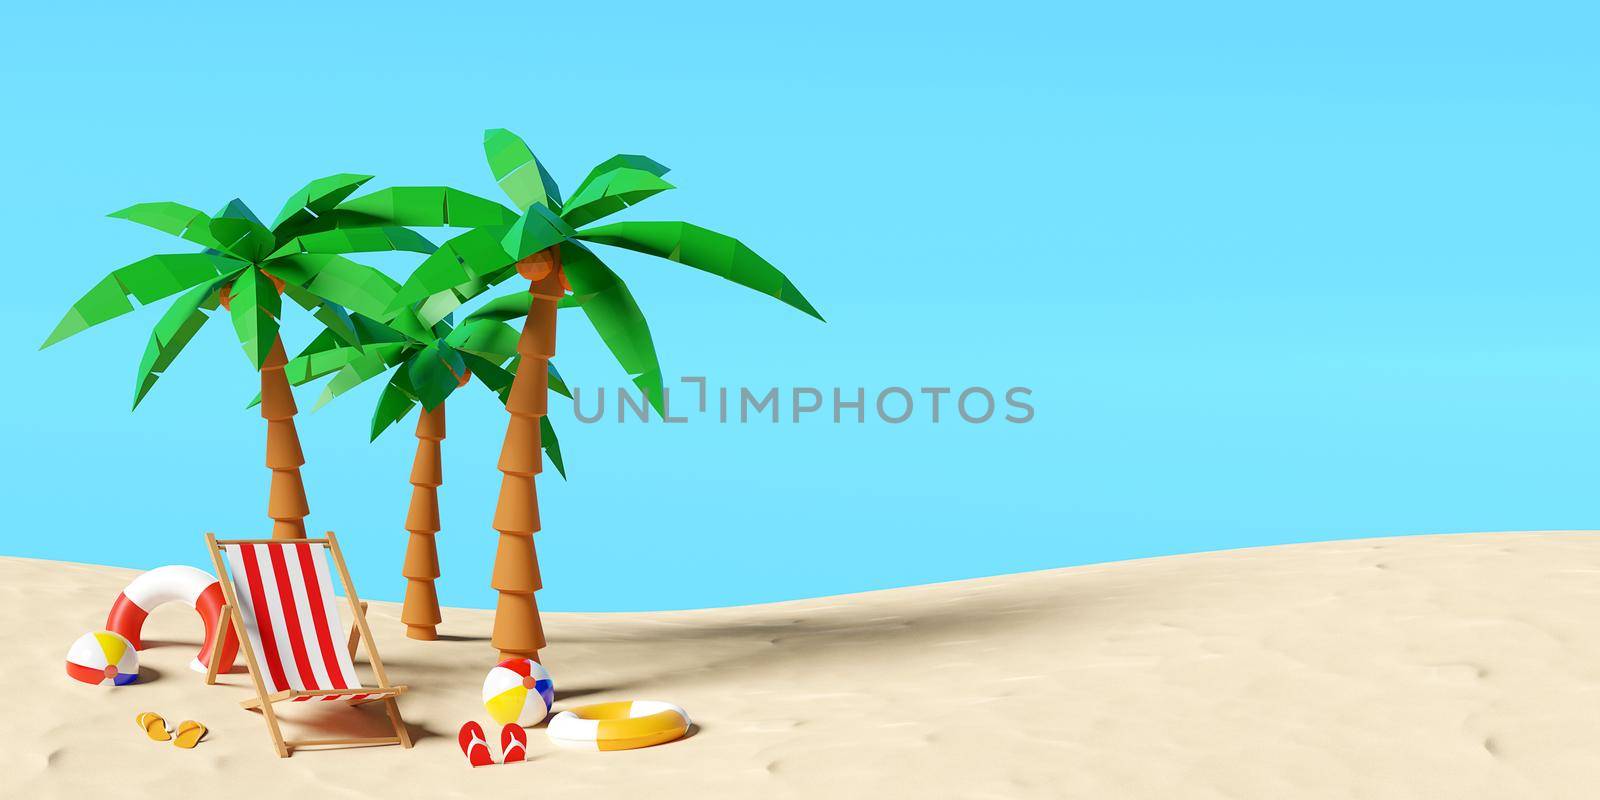 Summer vacation concept, A summer beach with beach umbrella, chairs and accessories, 3d illustration by nutzchotwarut